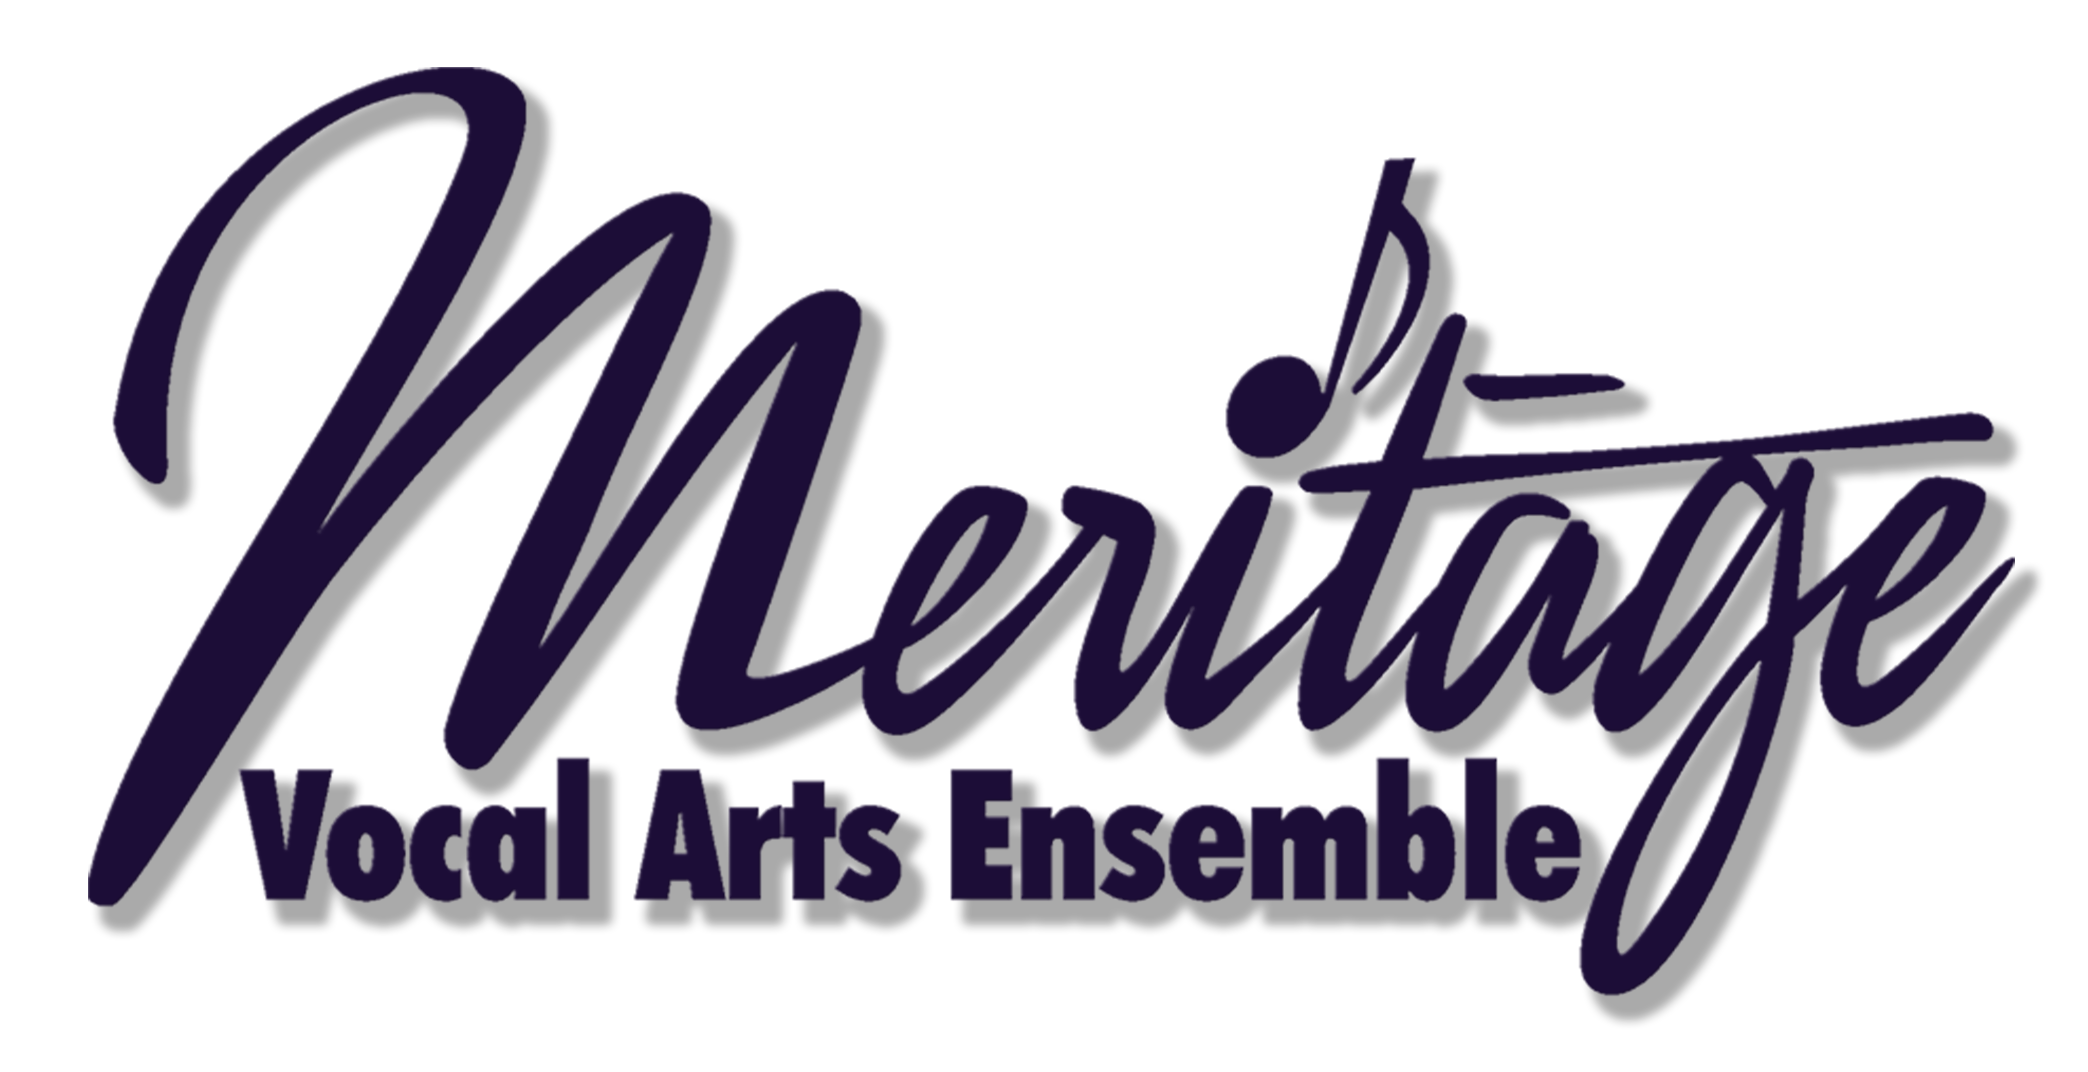 Meritage Vocal Arts Ensemble logo